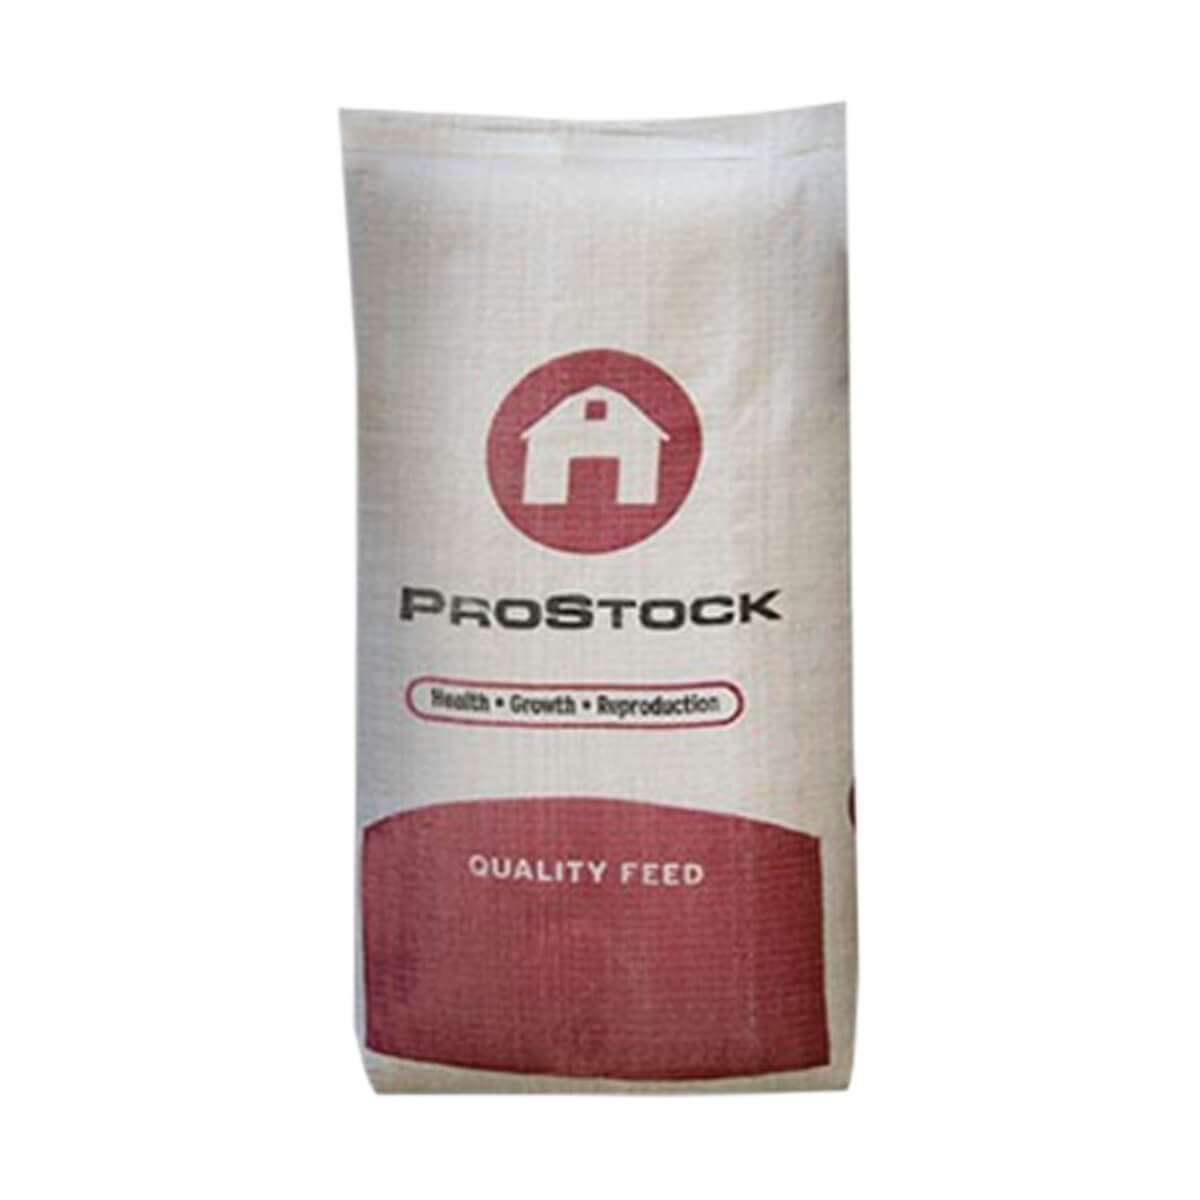 PROSTOCK™ 35% Vegetable Hog Grower Supplement - 25 kg